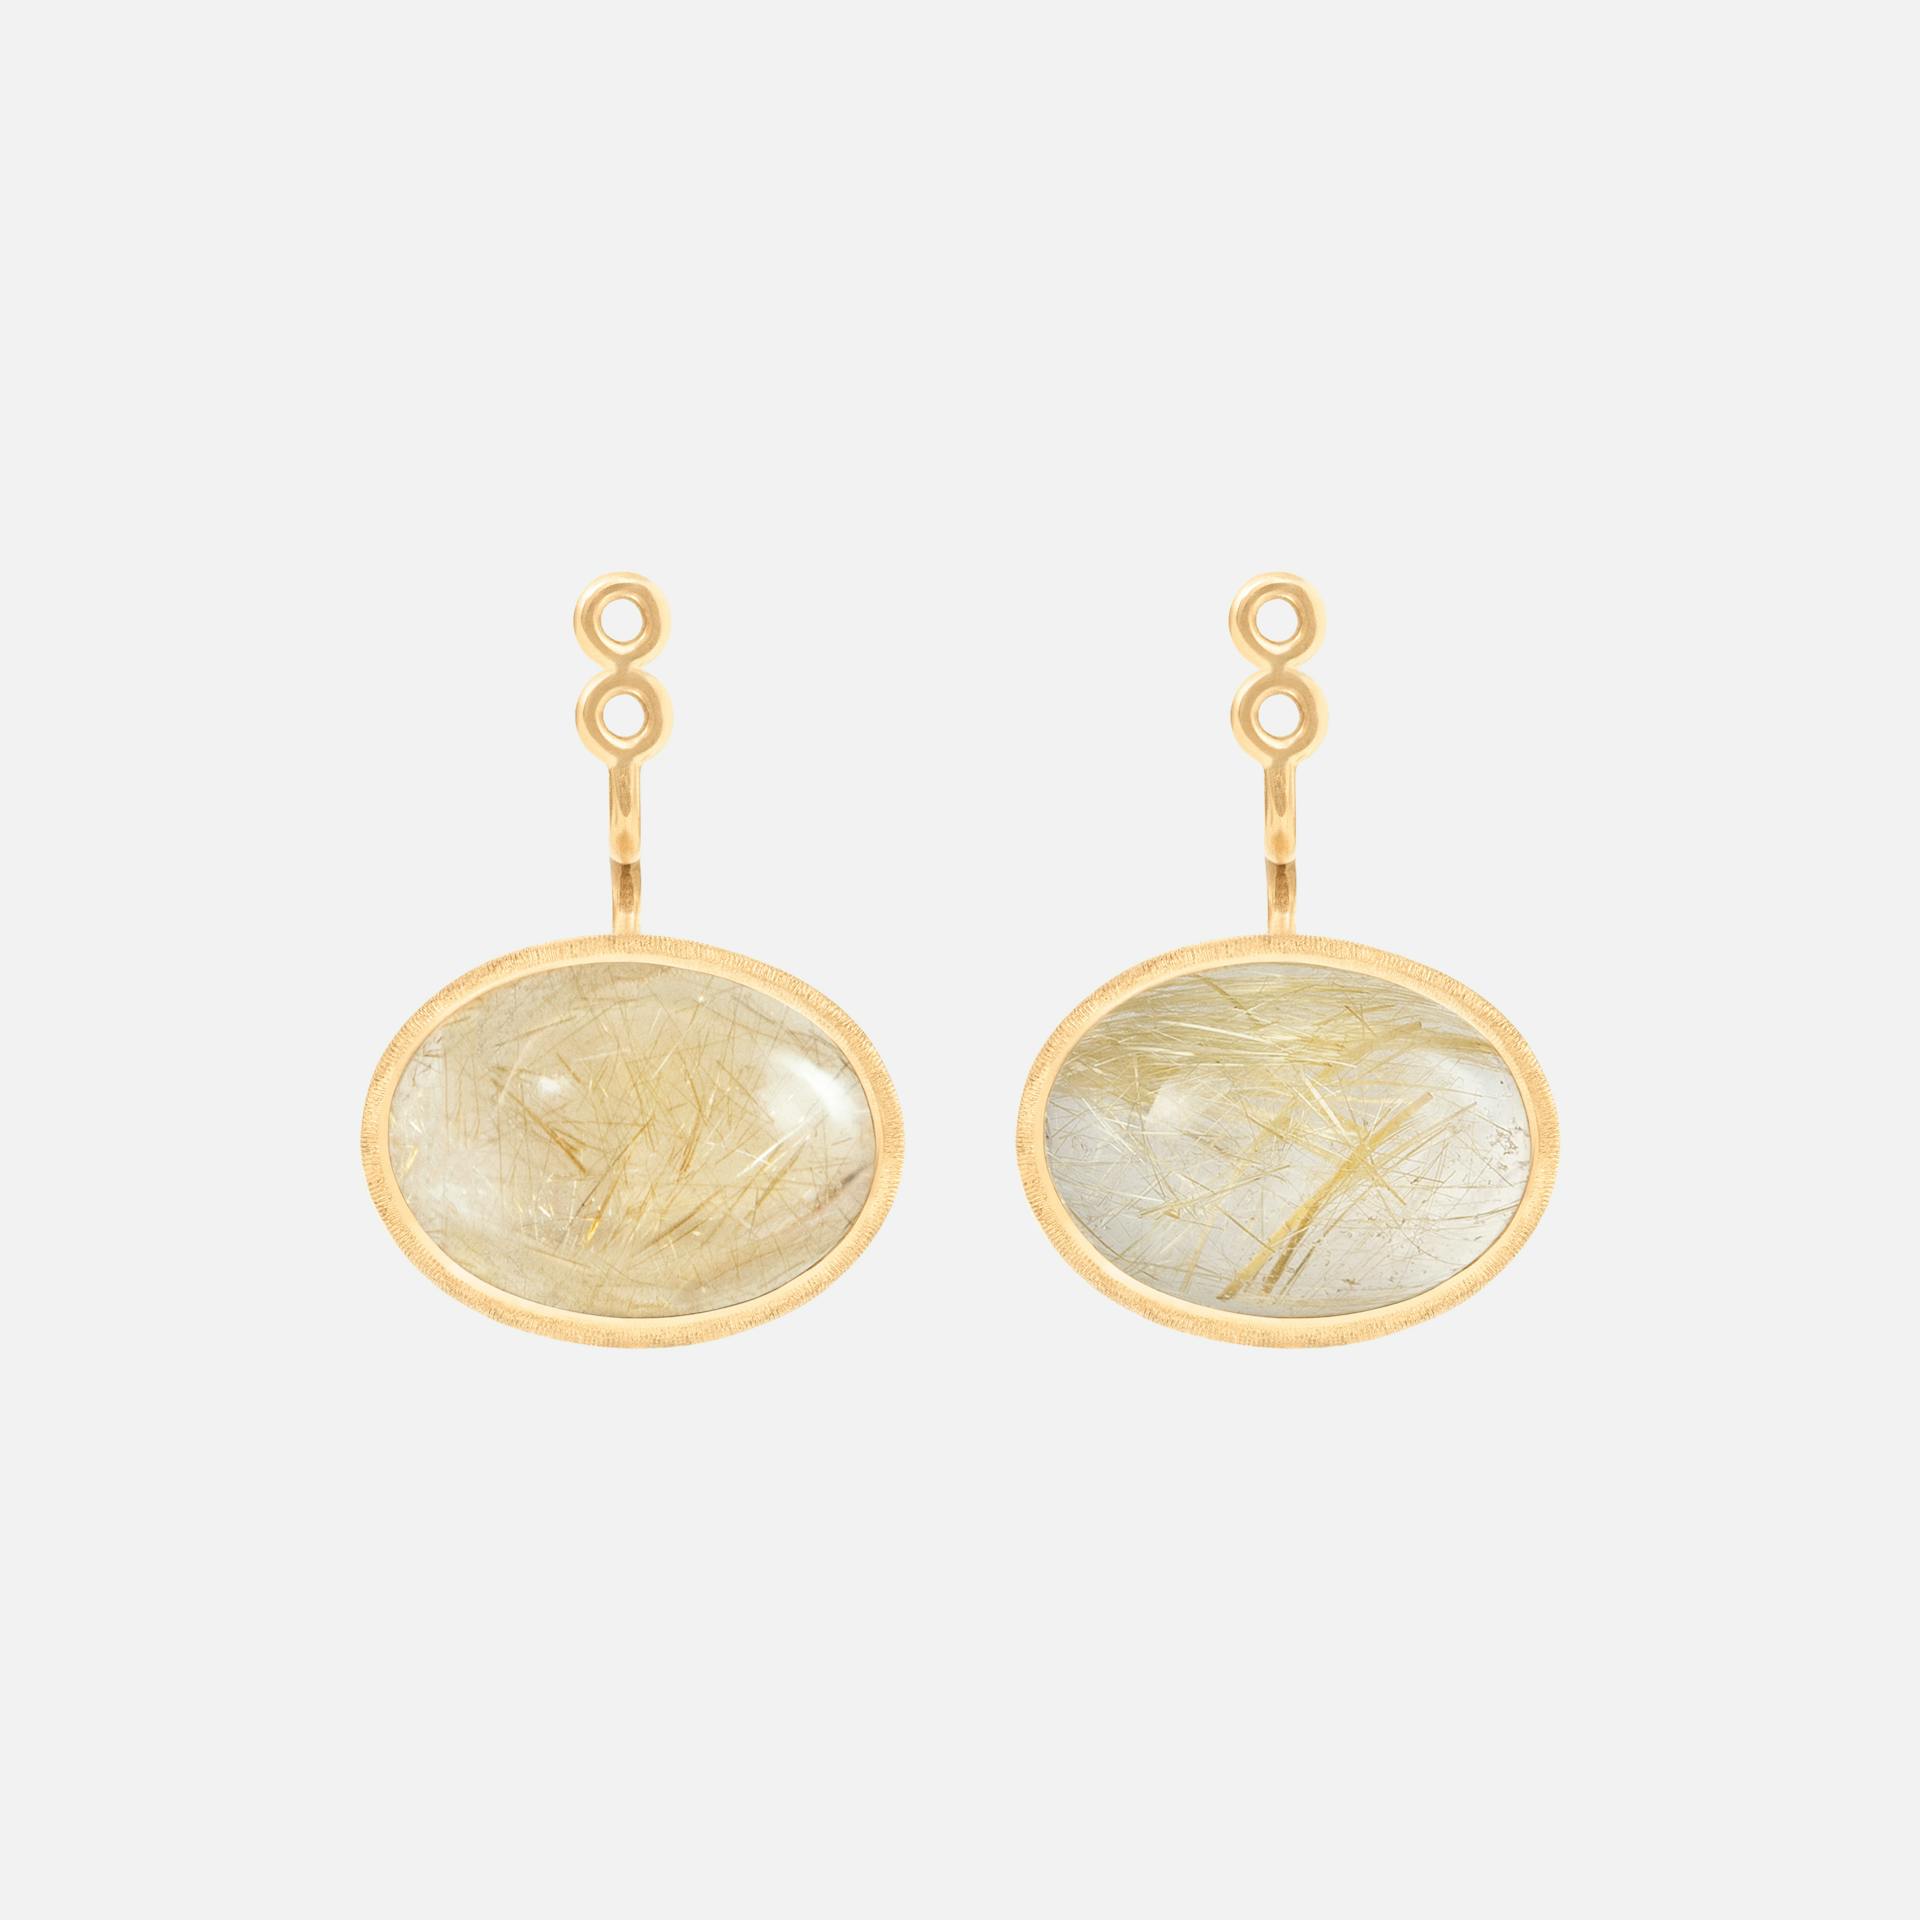 Lotus-øreringevedhæng små i gult guld med rutilkvarts | Ole Lynggaard Copenhagen